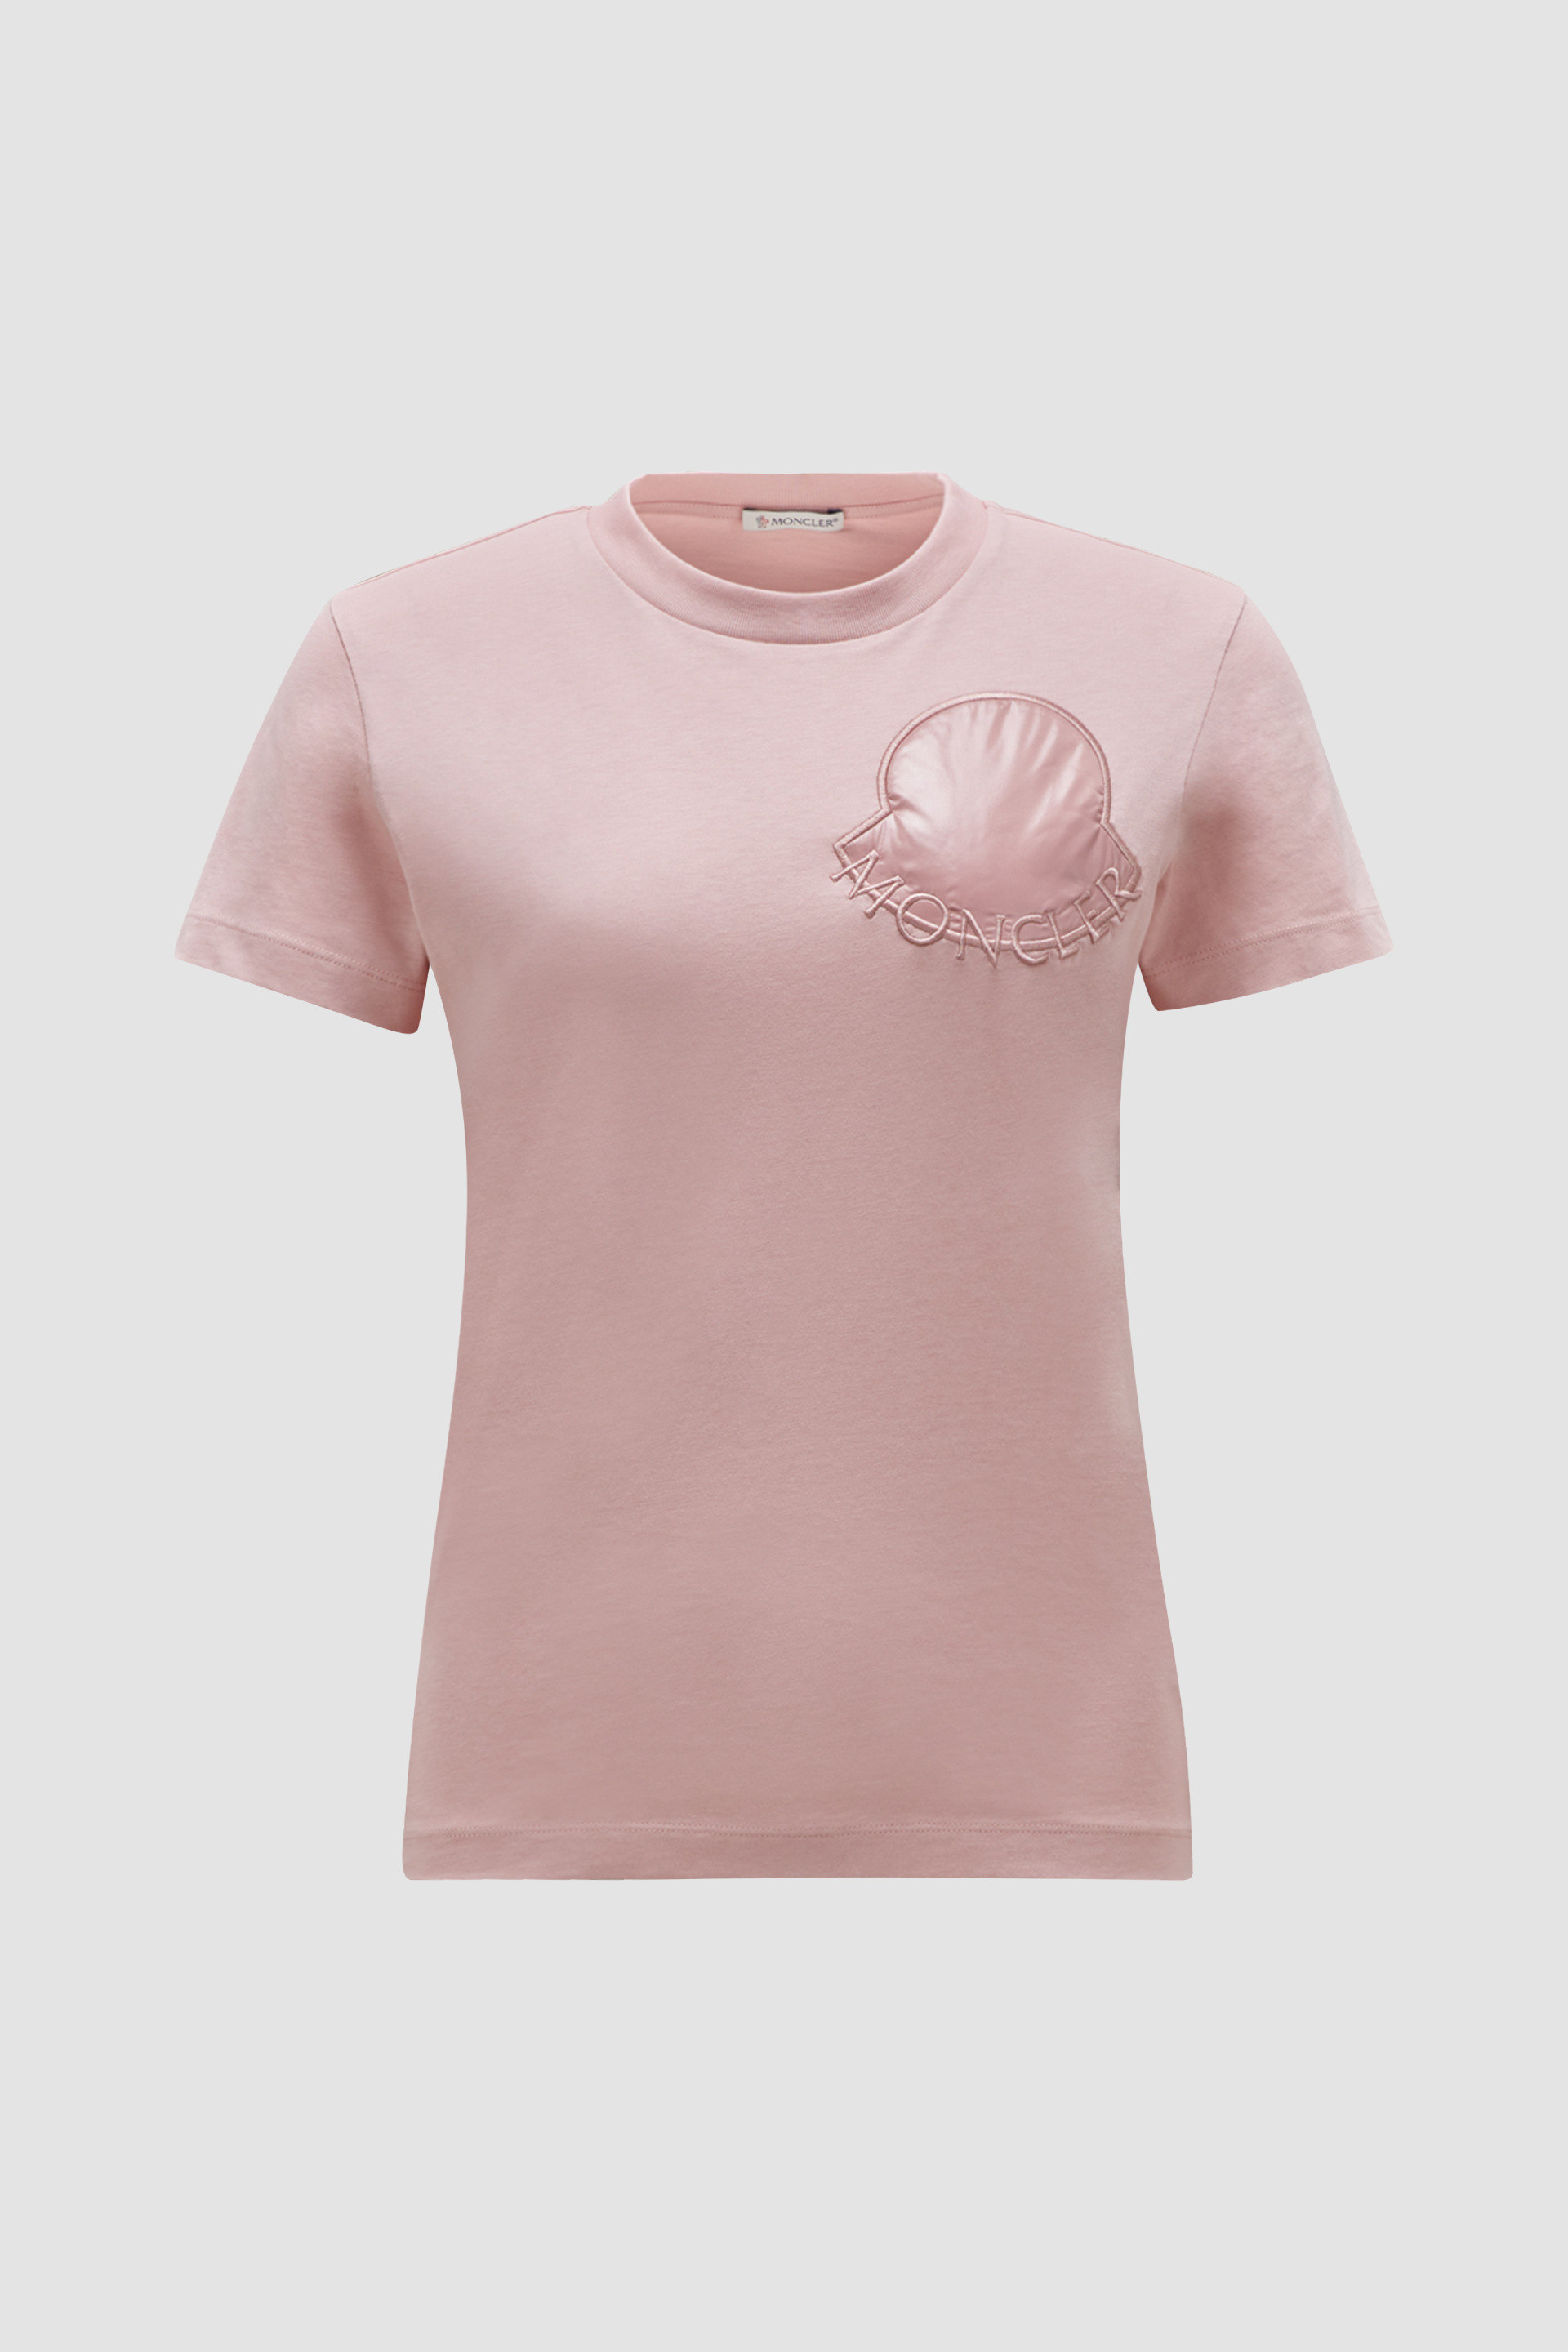 MONCLER Tシャツ レディース Sサイズ ピンク - レディース